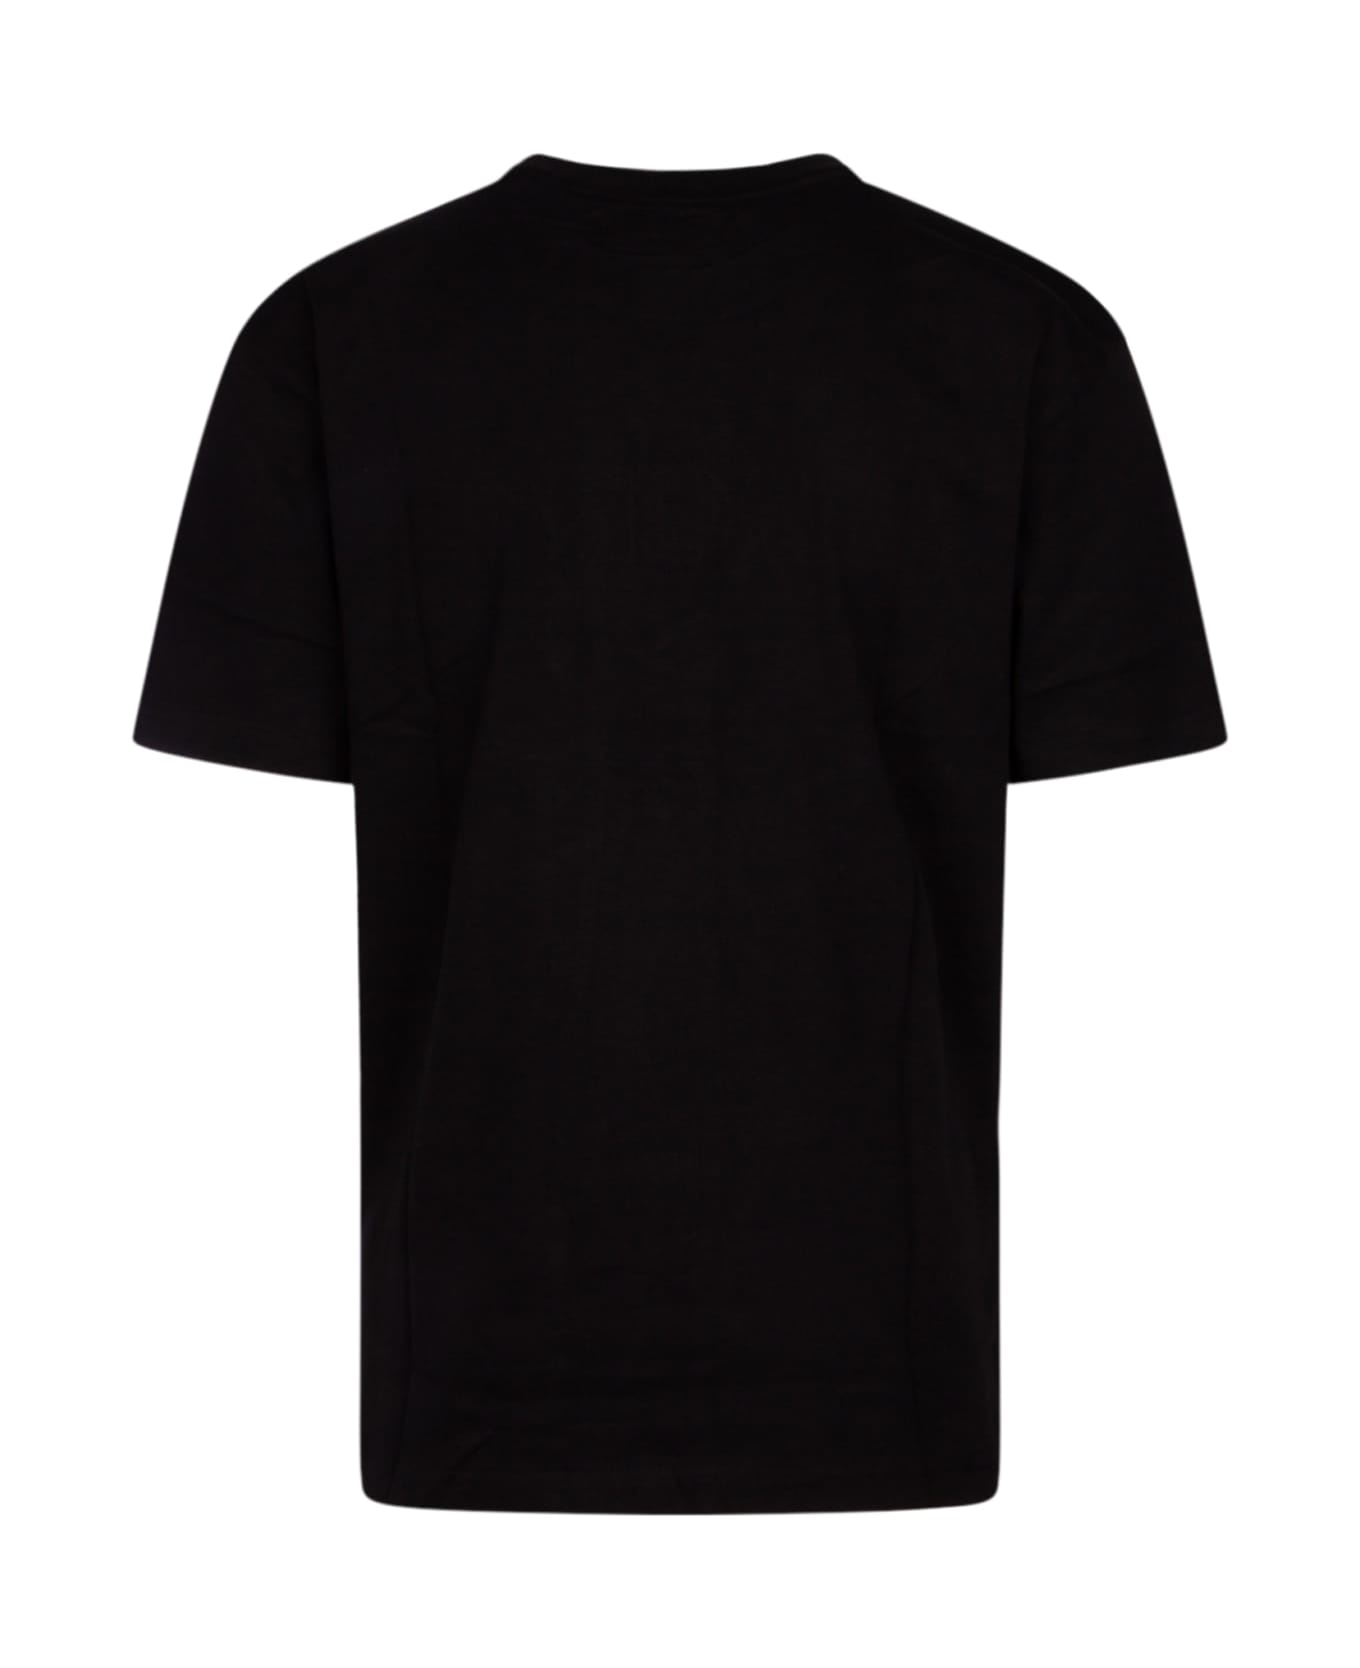 Market T-shirt - BLACK